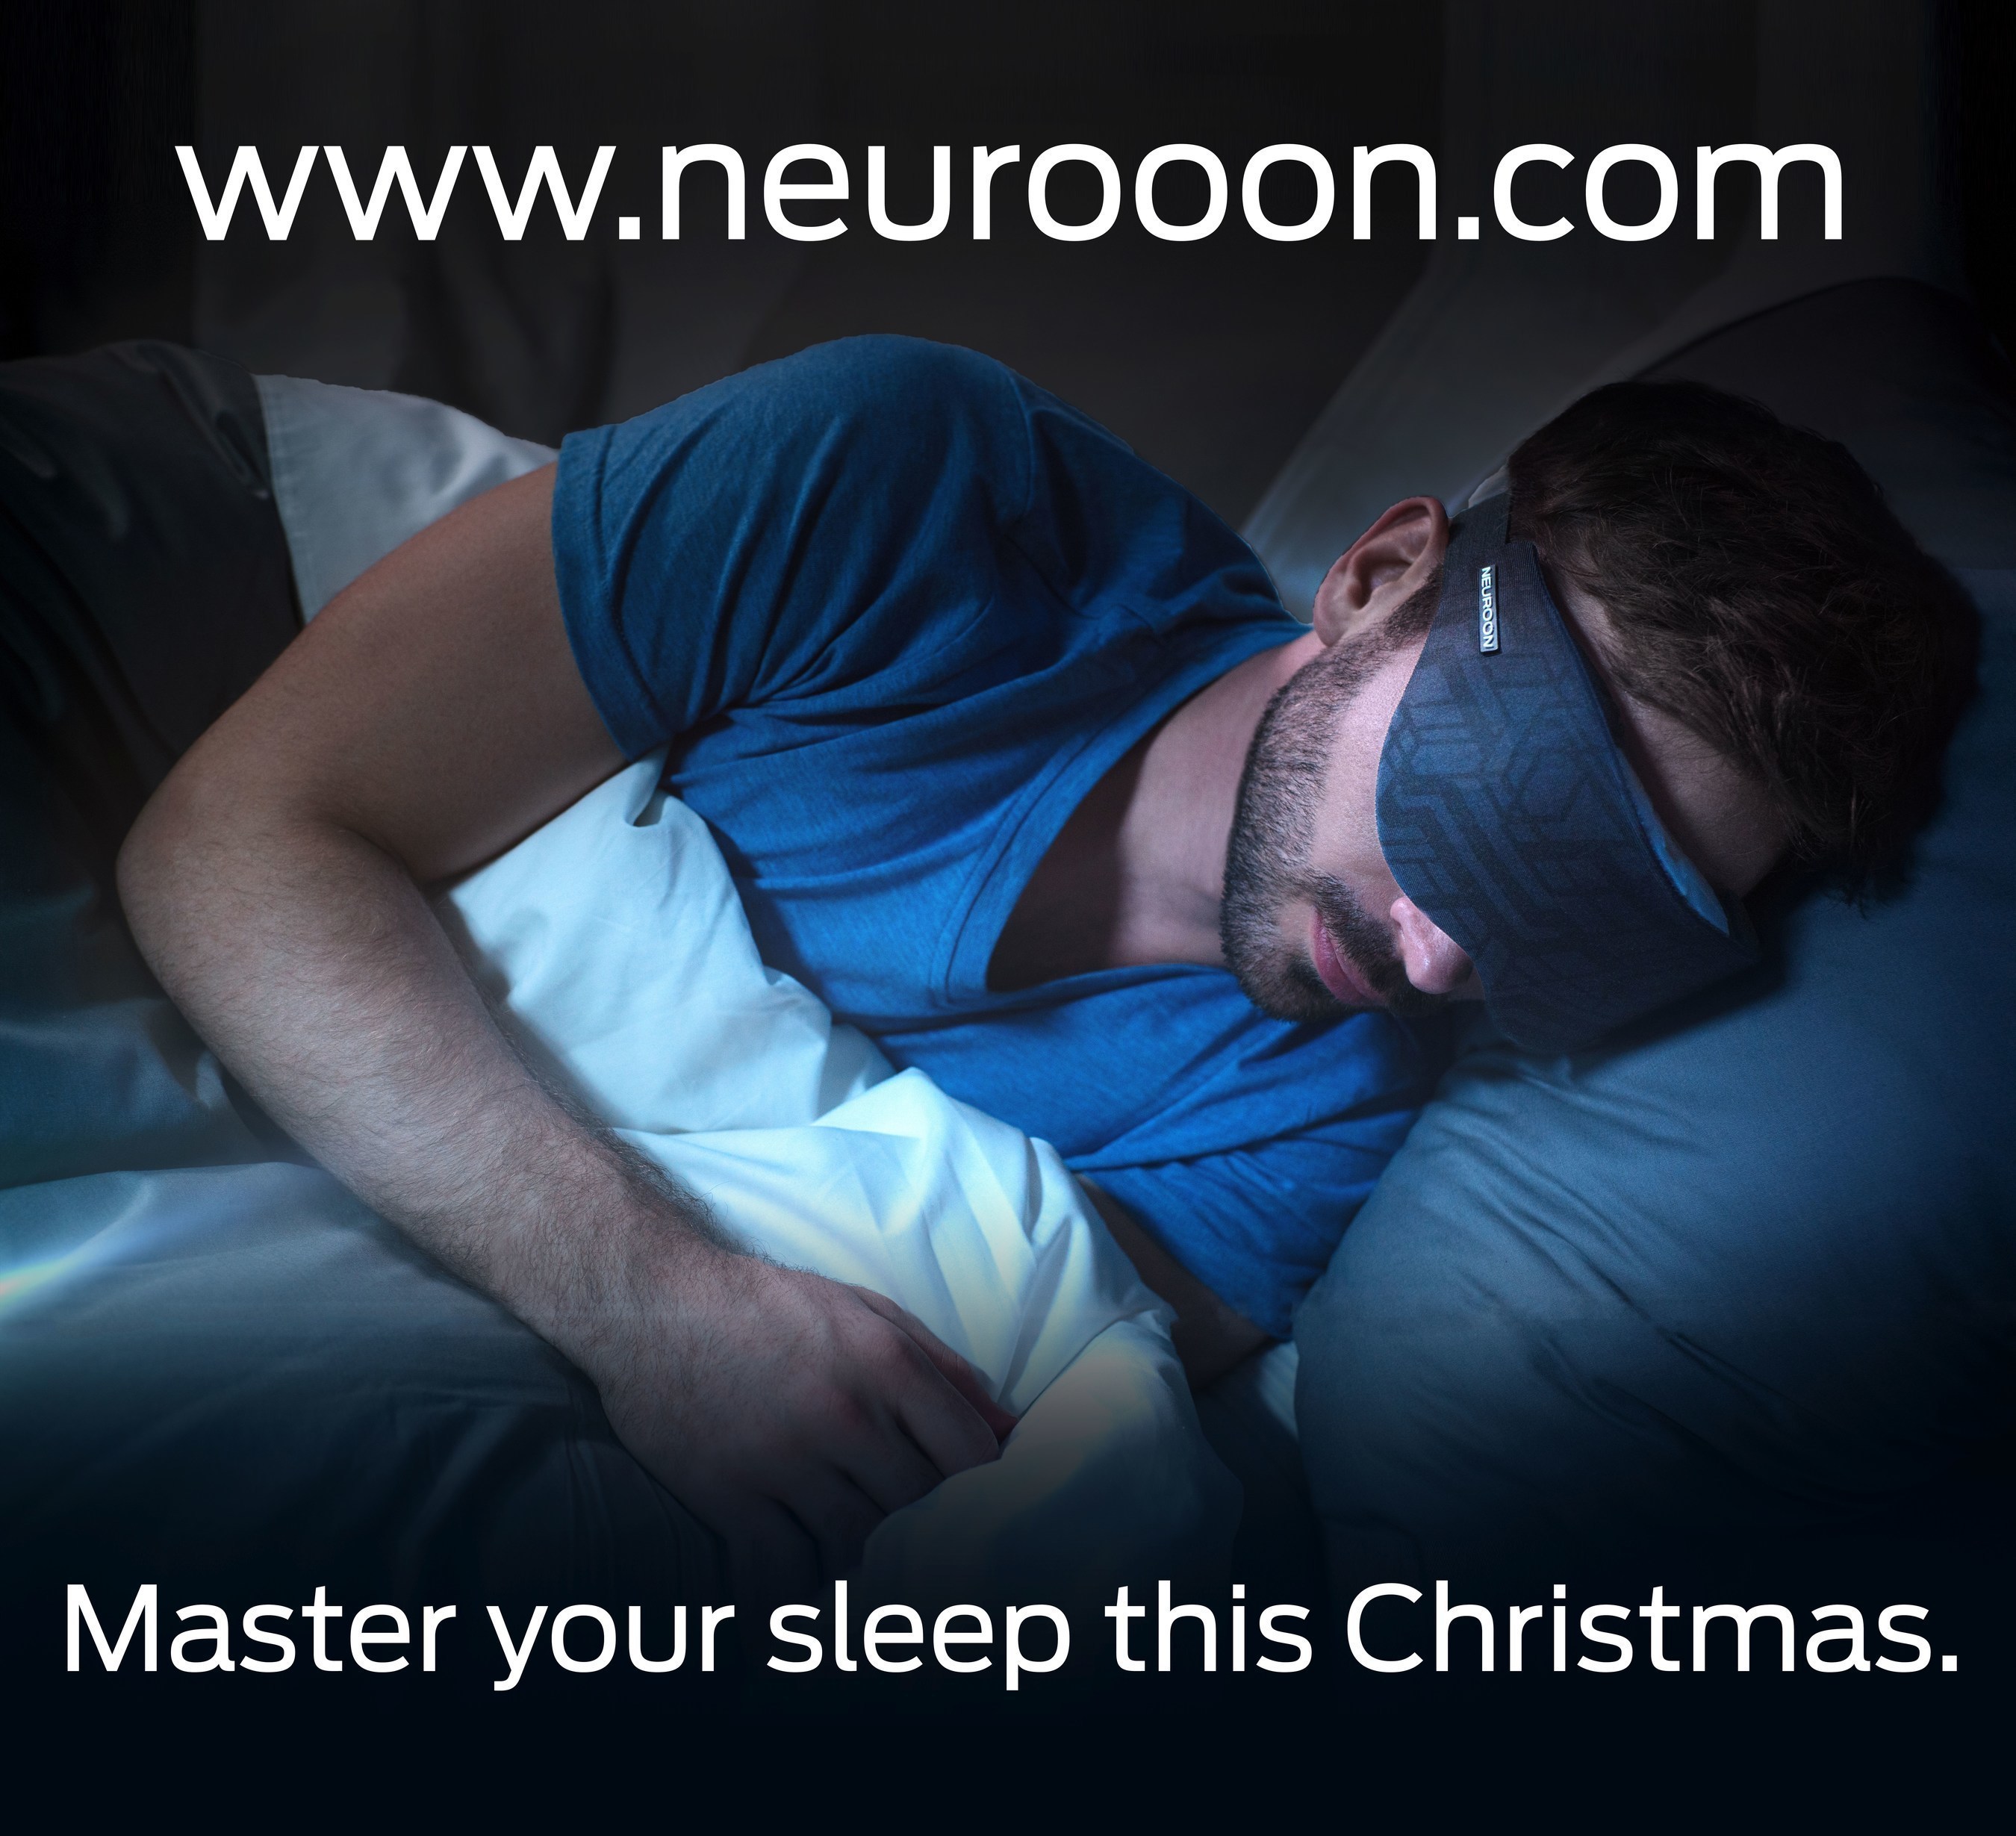 Neuroon: Smart Sleep Mask. Give the ones you love better sleep for Christmas.